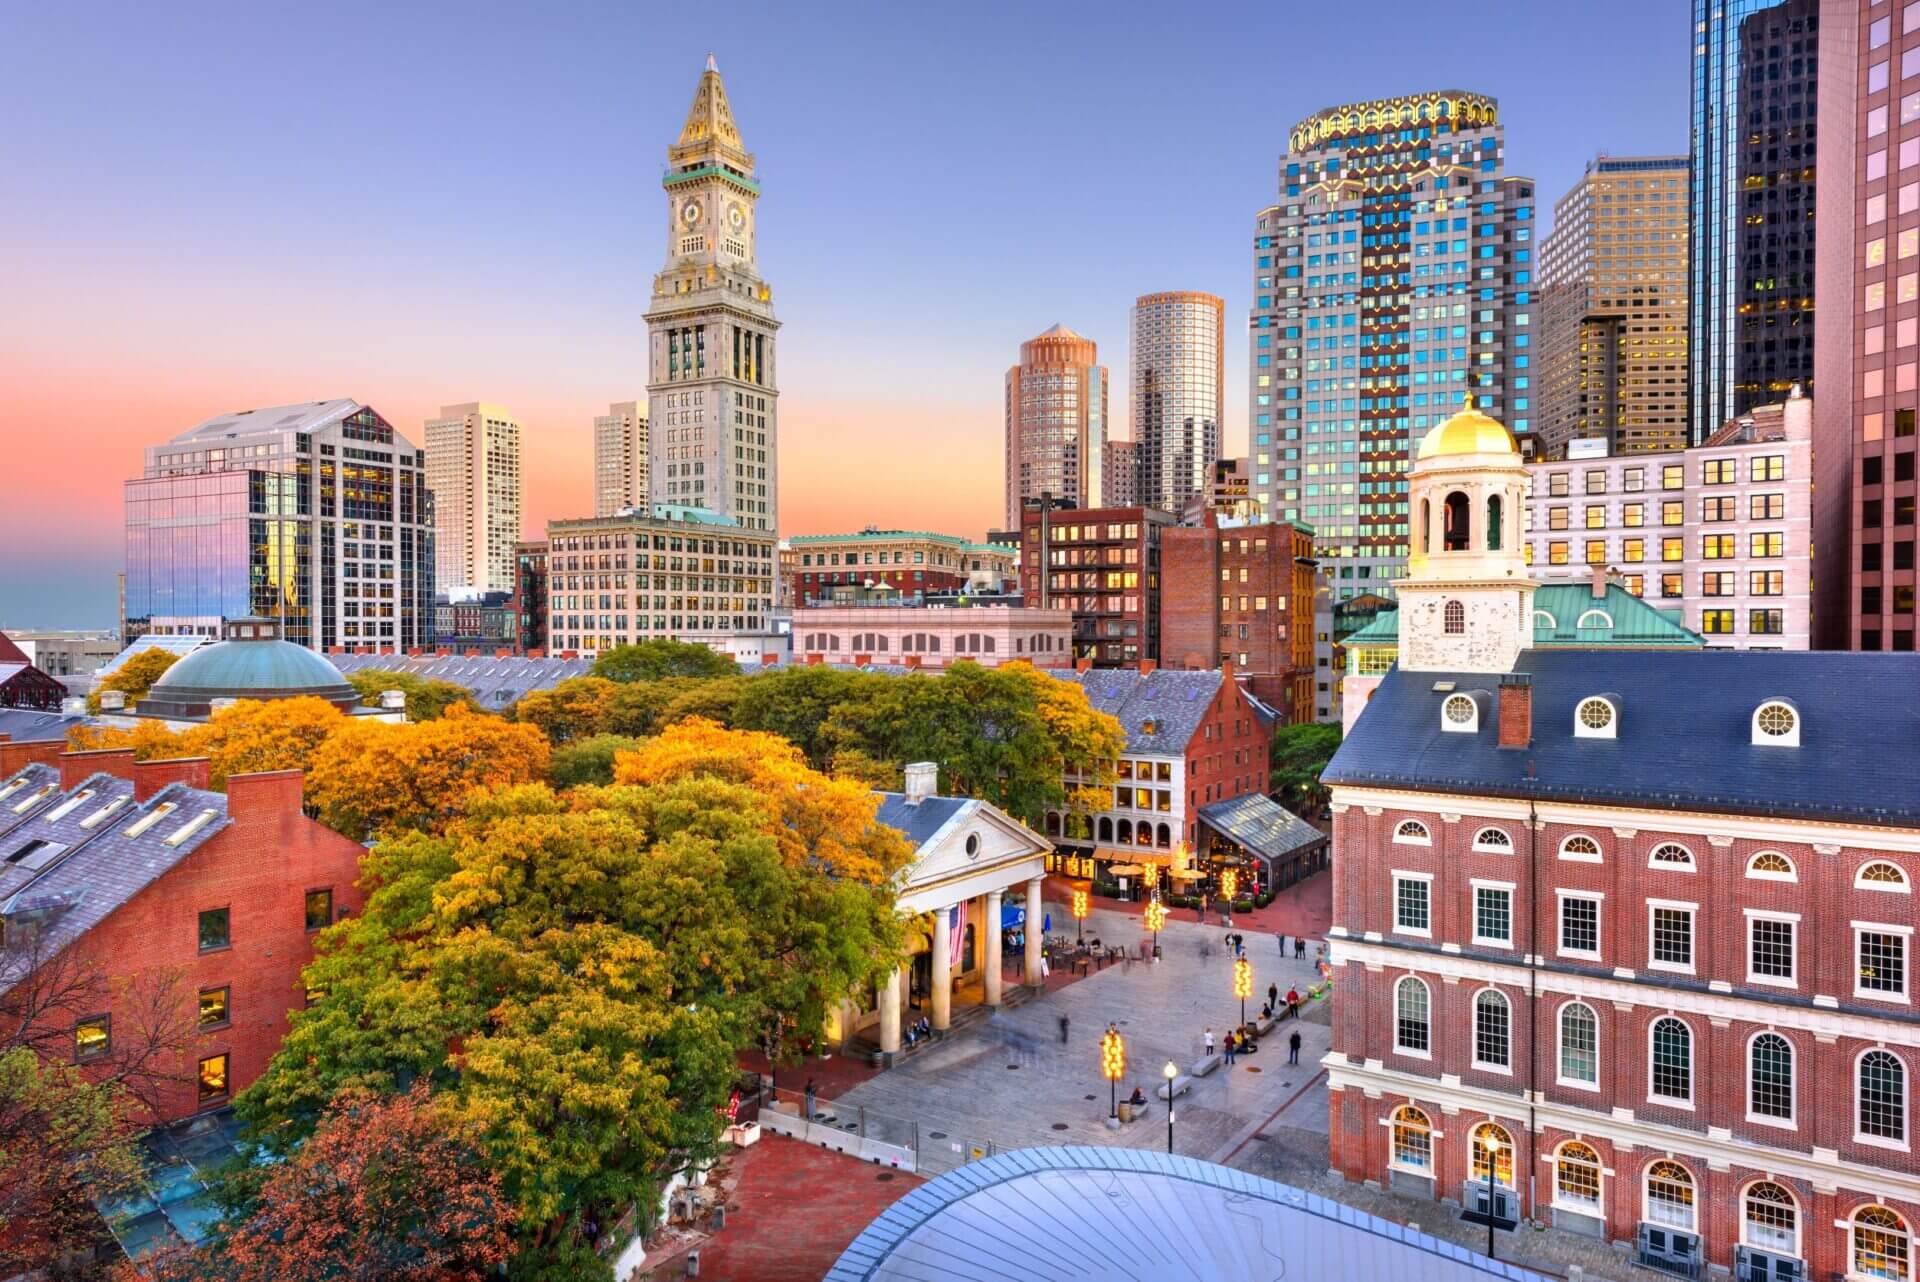 Skyline picture of Boston, MA